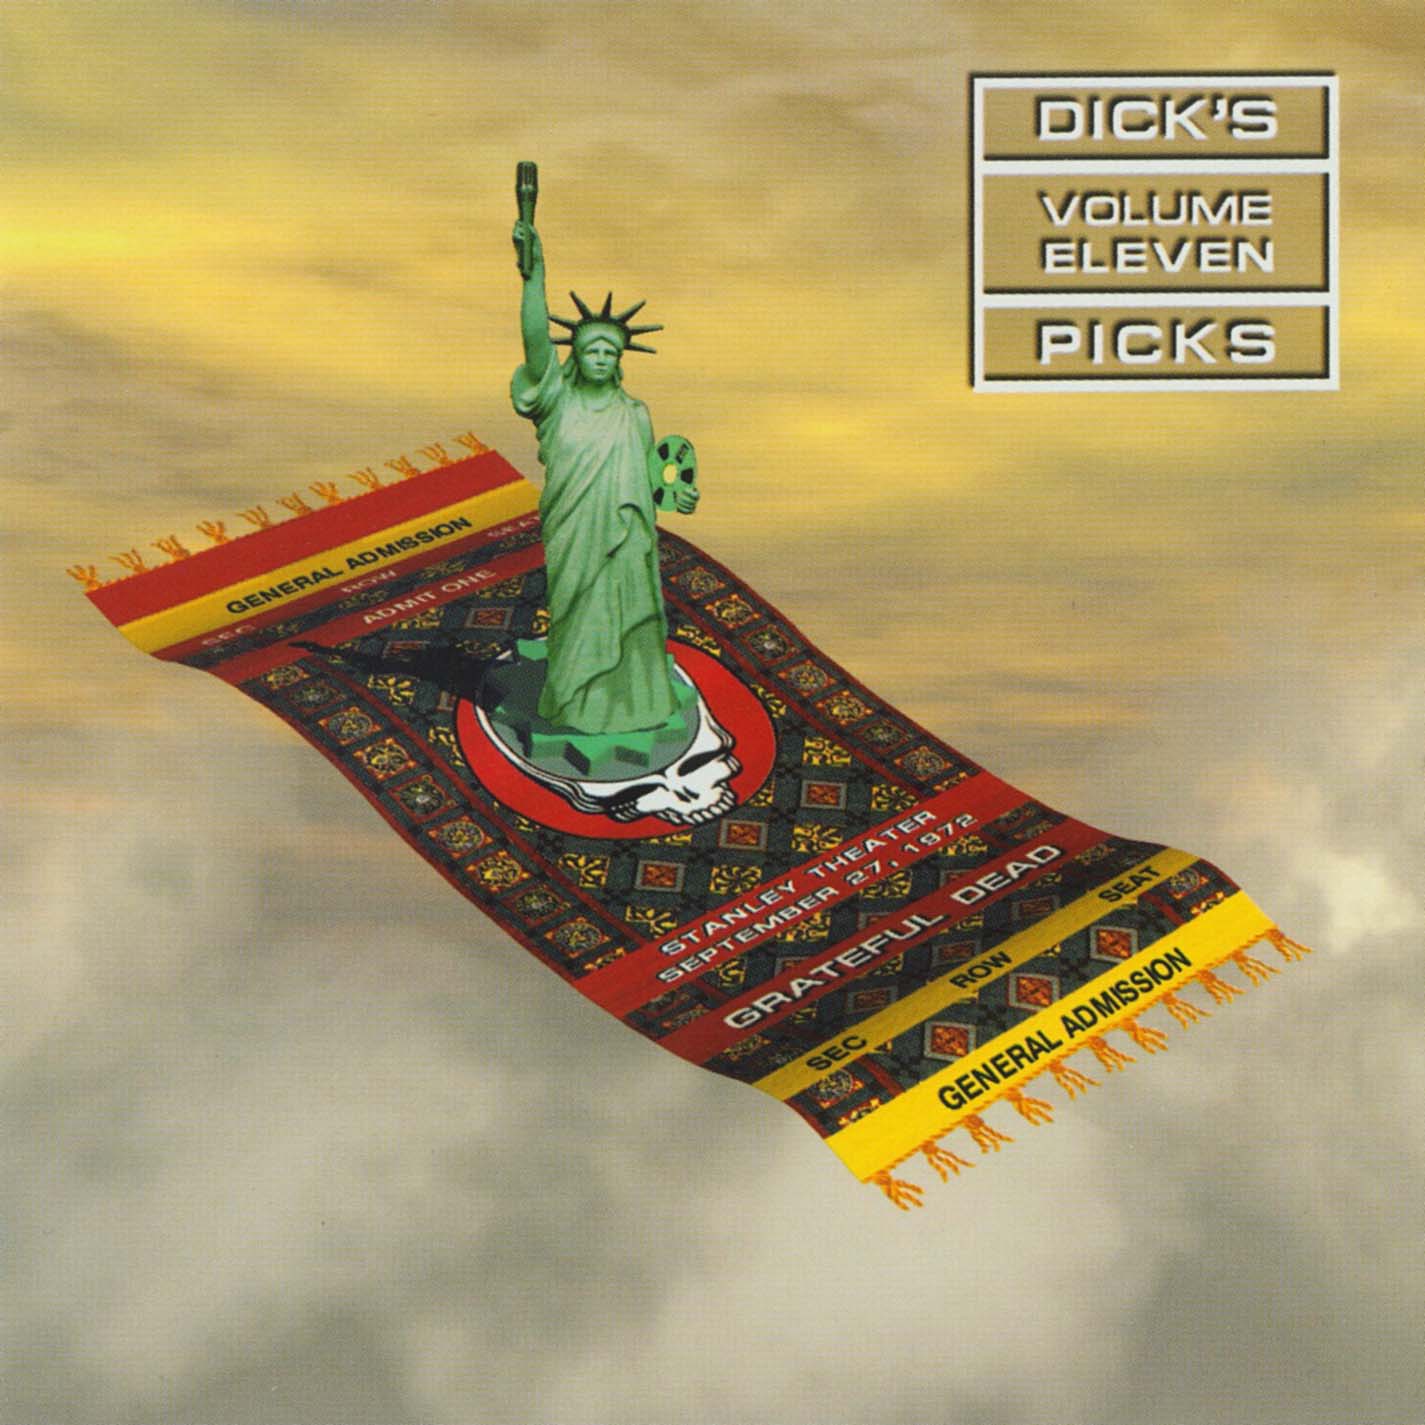 Grateful Dead Dick's Picks 11 album cover artwork